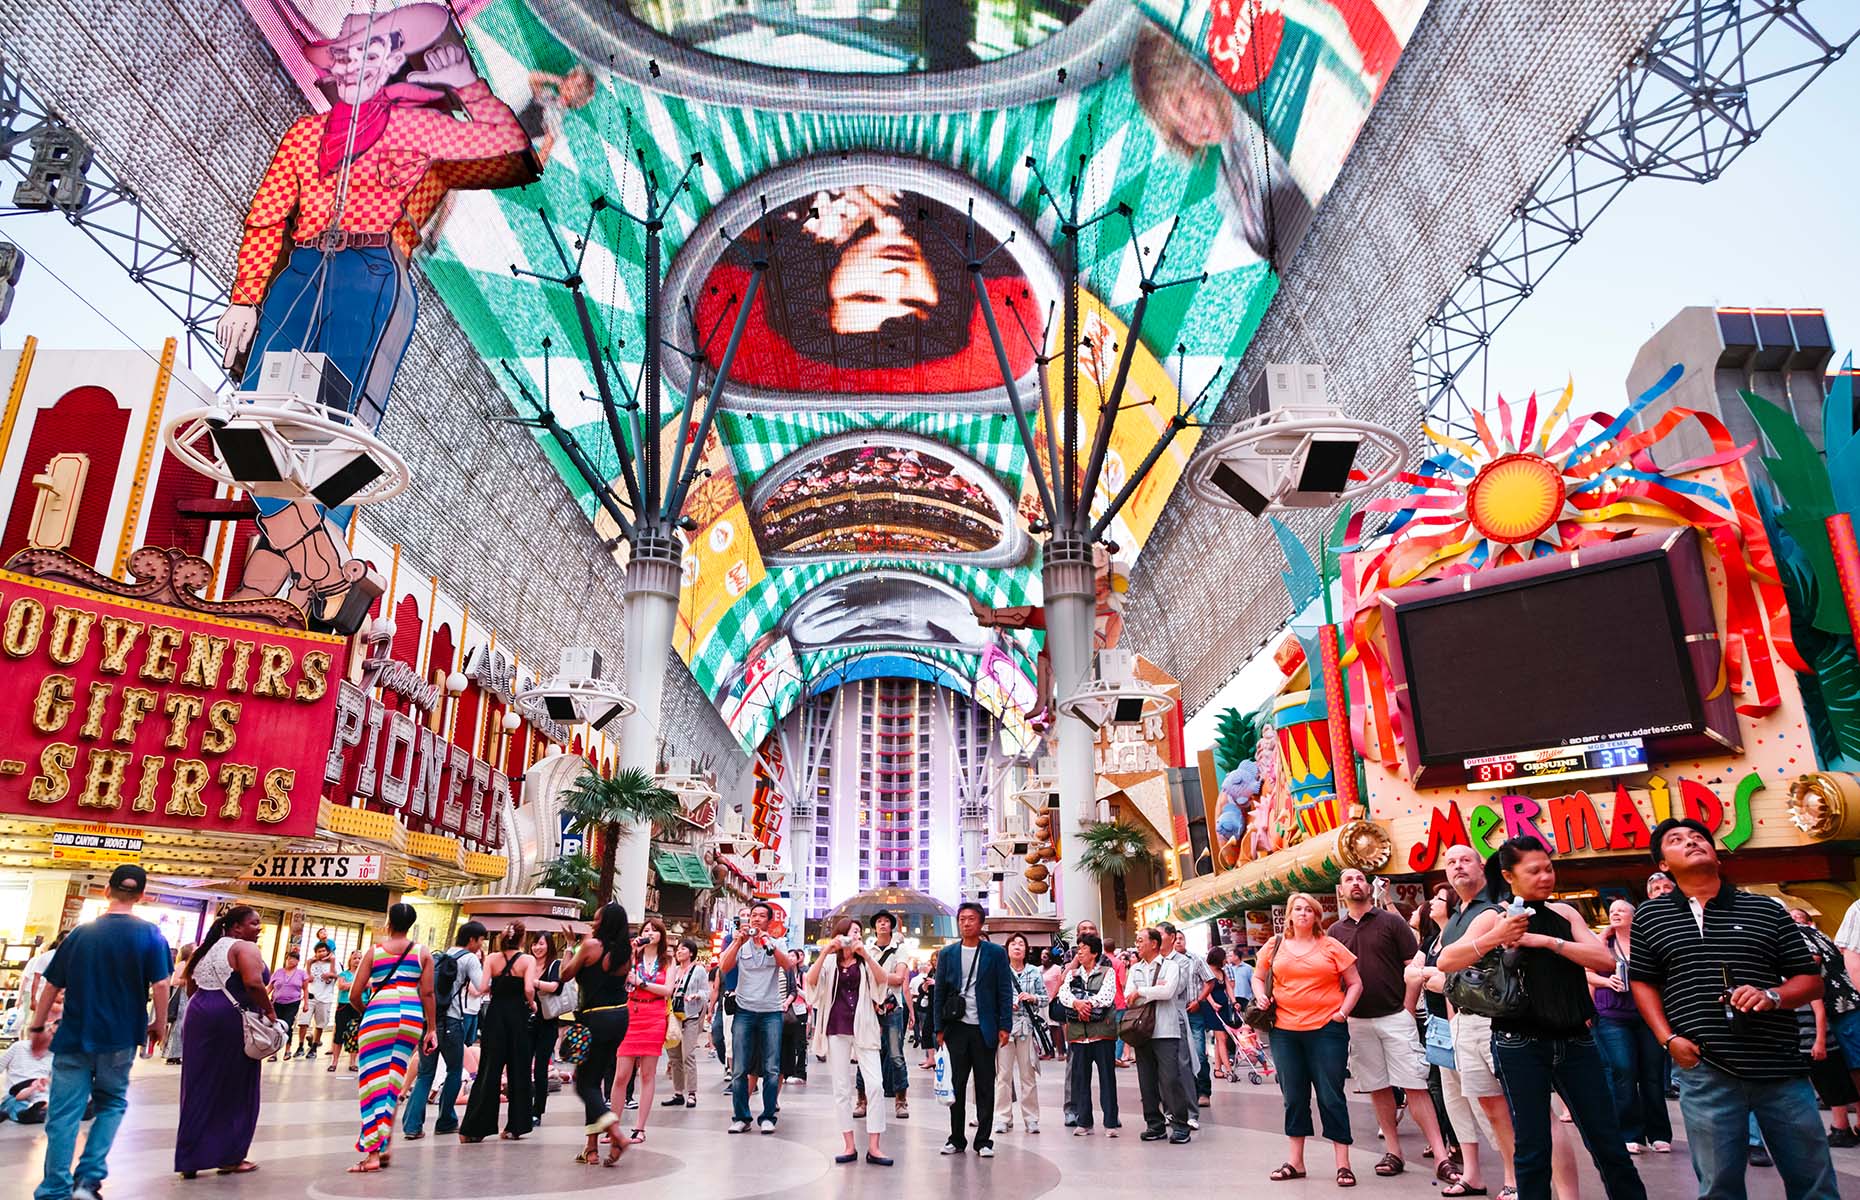 Fremont Street Experience in Las Vegas (Image: Paul Maguire/Shutterstock)